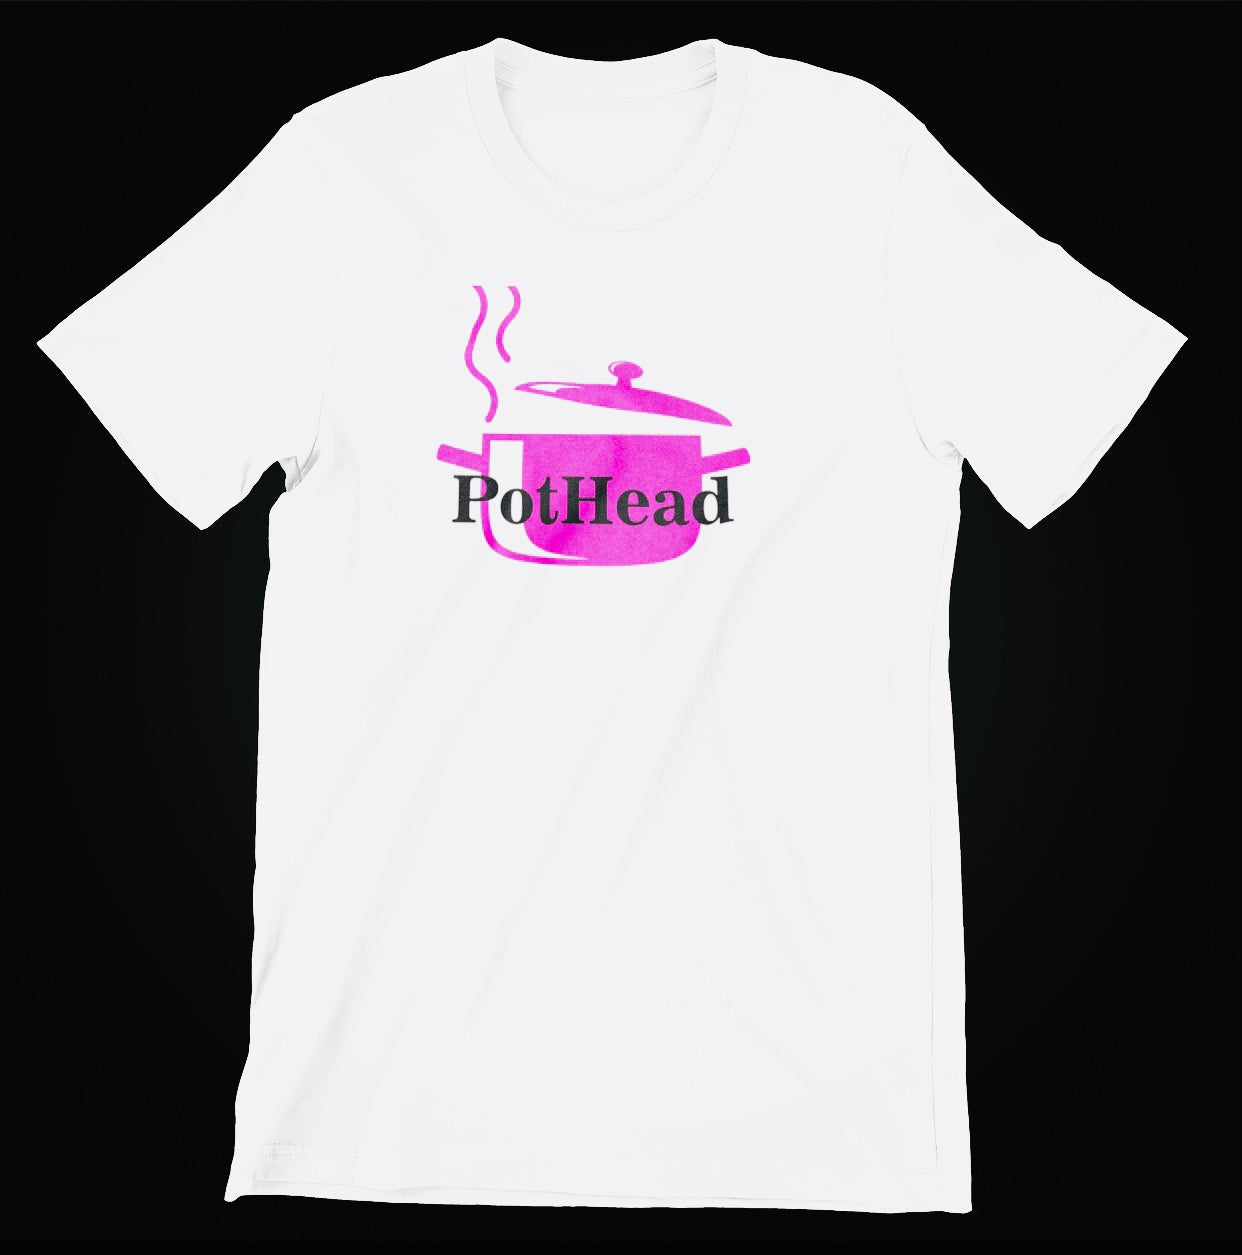 PotHead T-Shirt